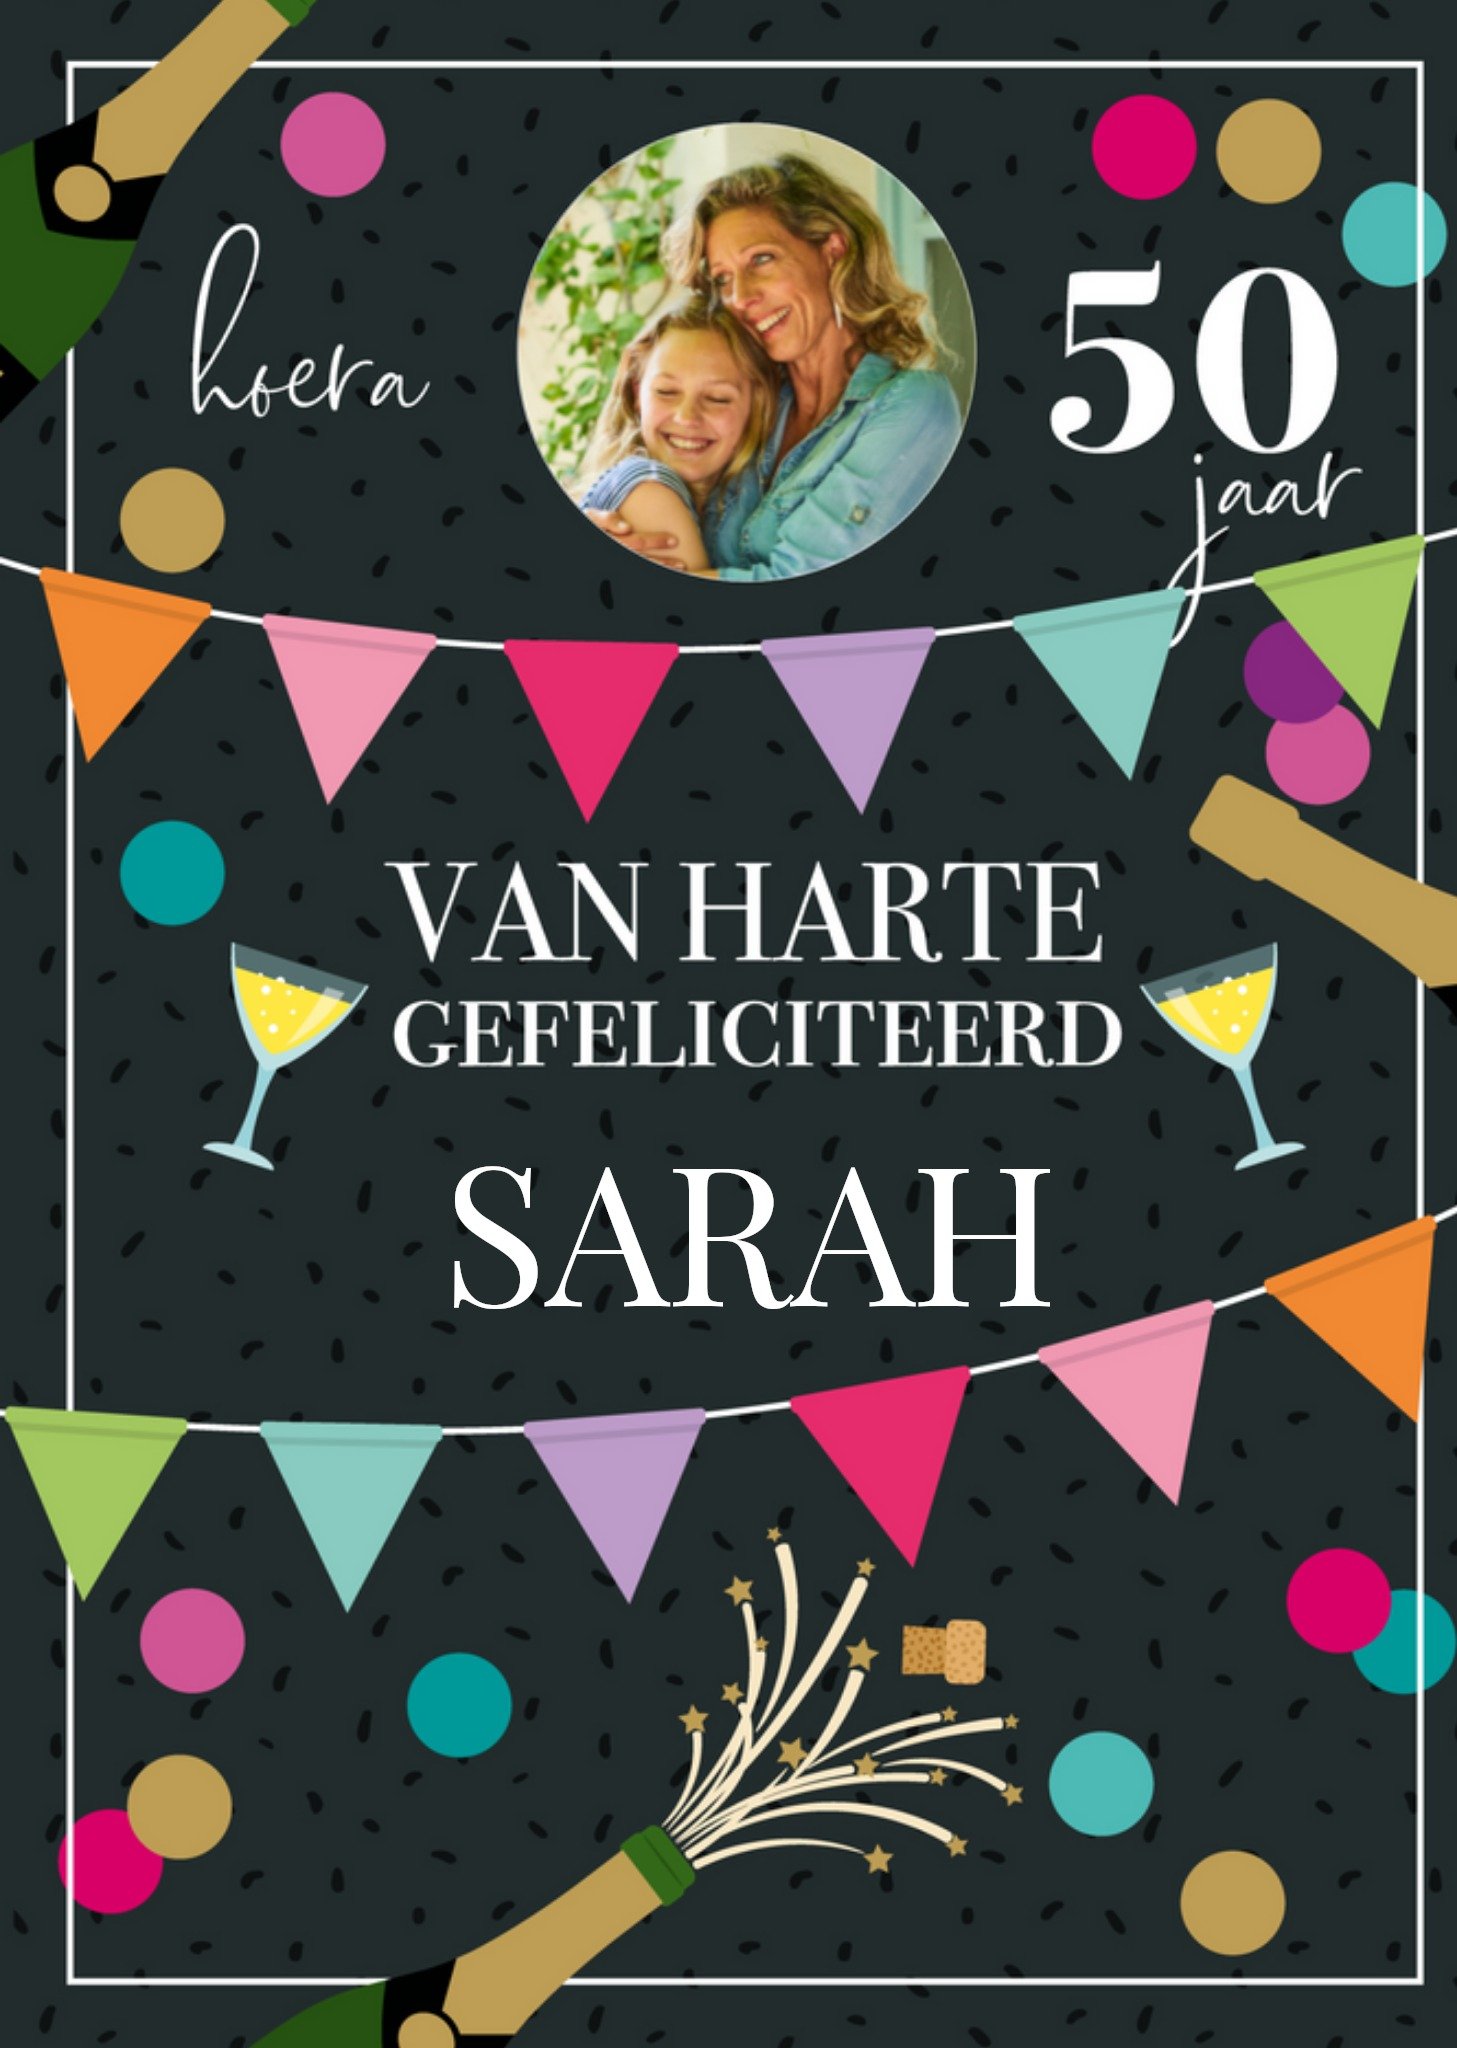 Paperclip - Verjaardag - Sarah - Vlaggen